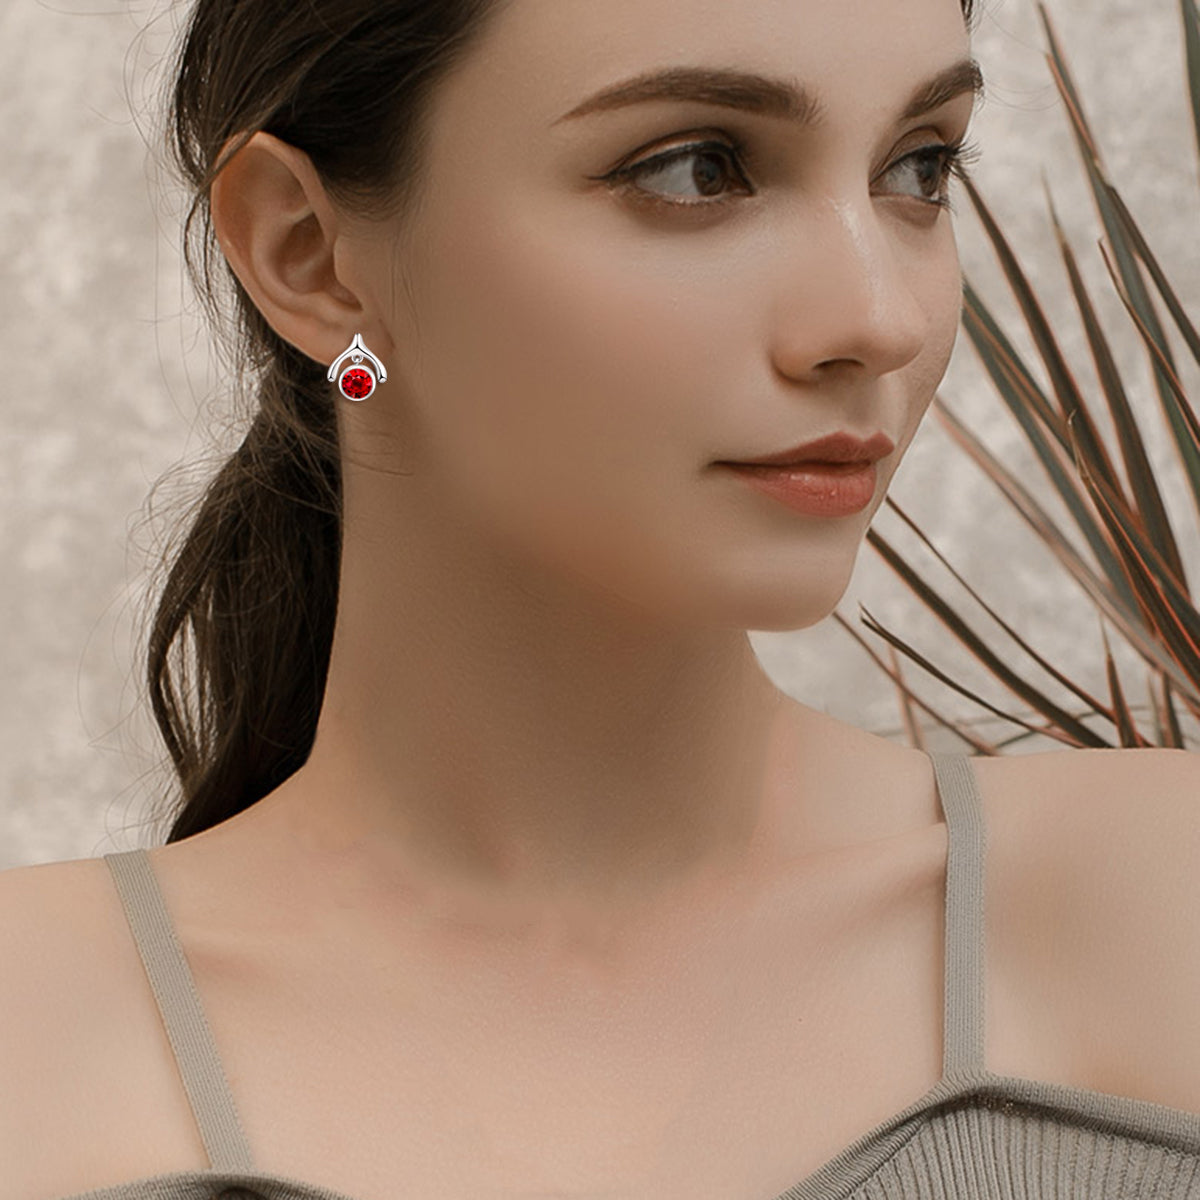 Wishbone Red Crystal Earrings Flower Spring Bright-colored Silver Earrings